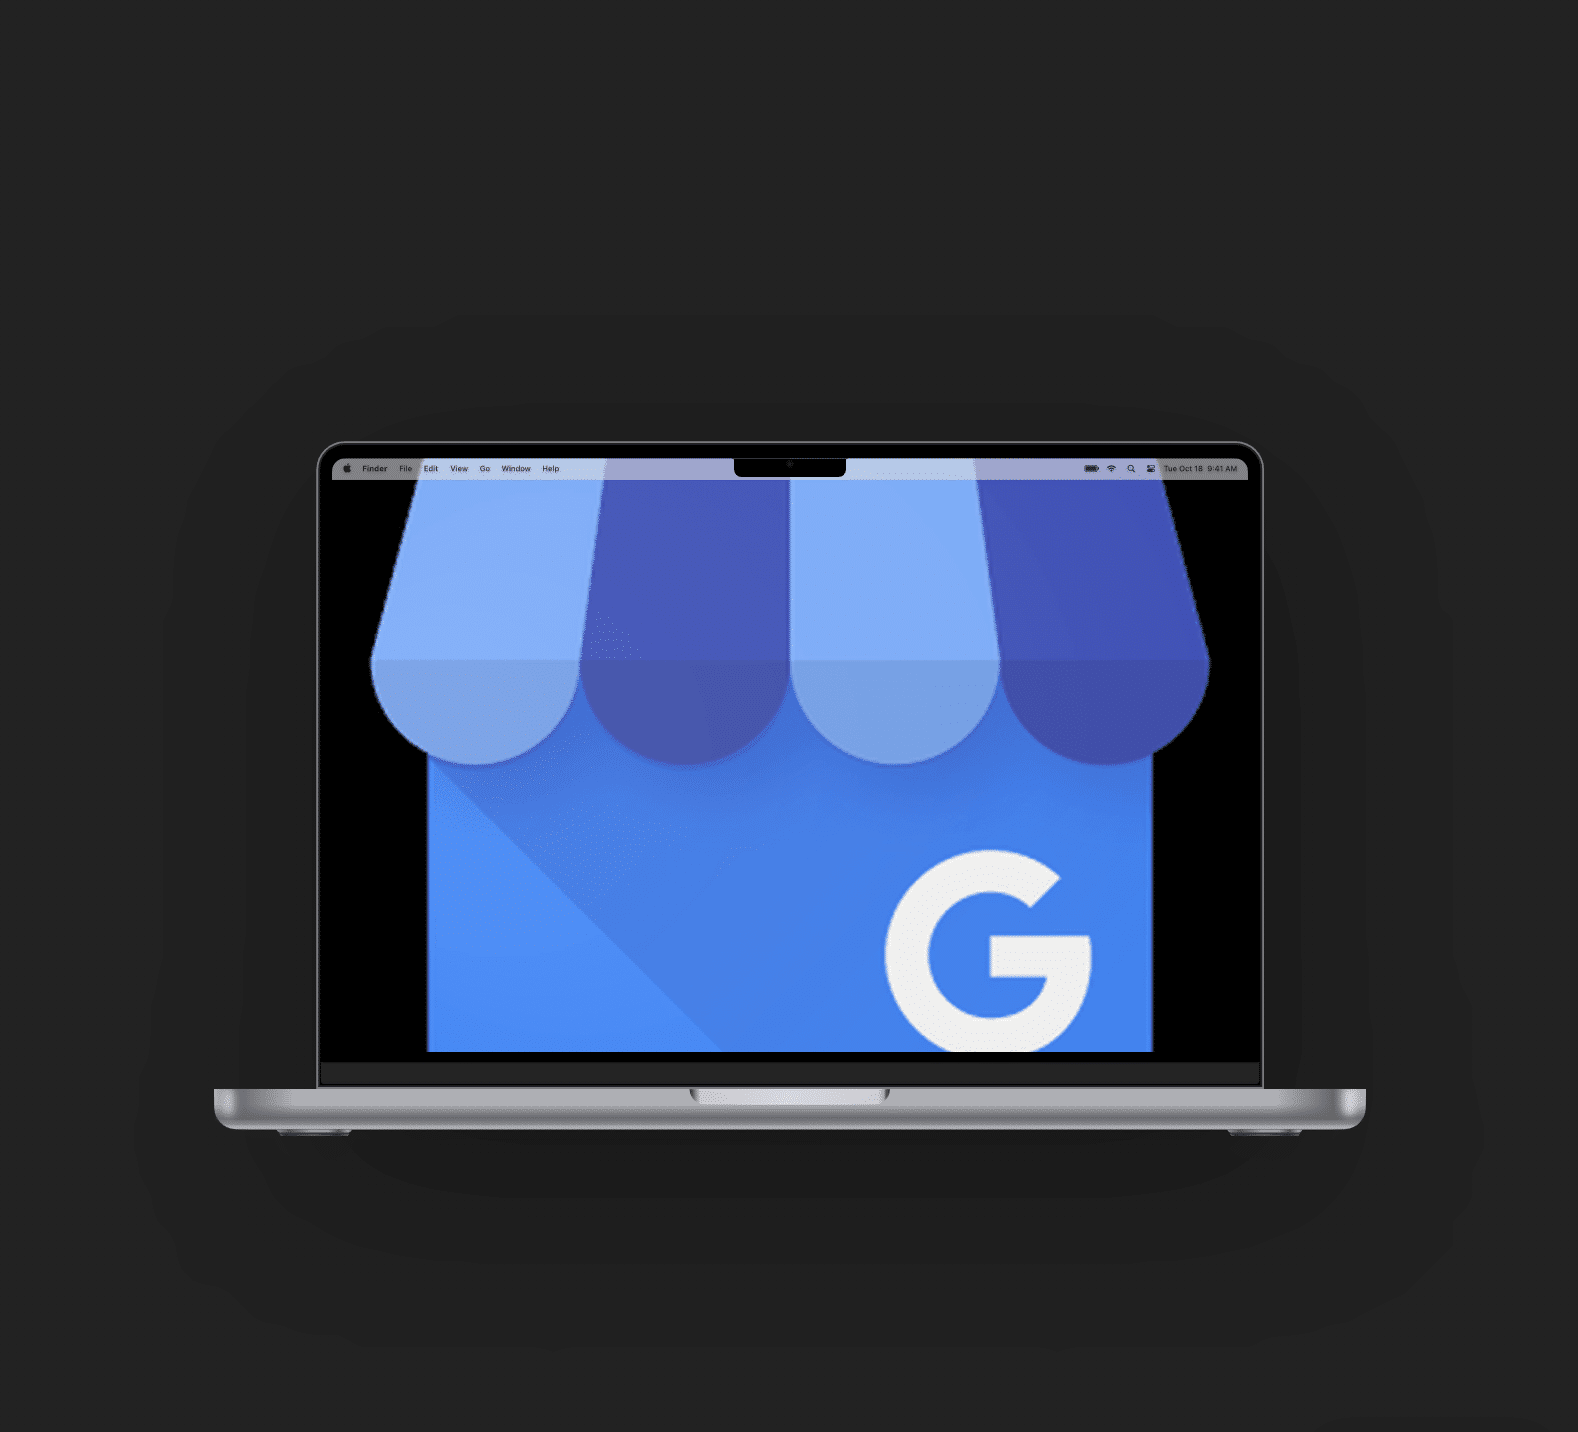 GMB logo mocked-up on a laptop screen